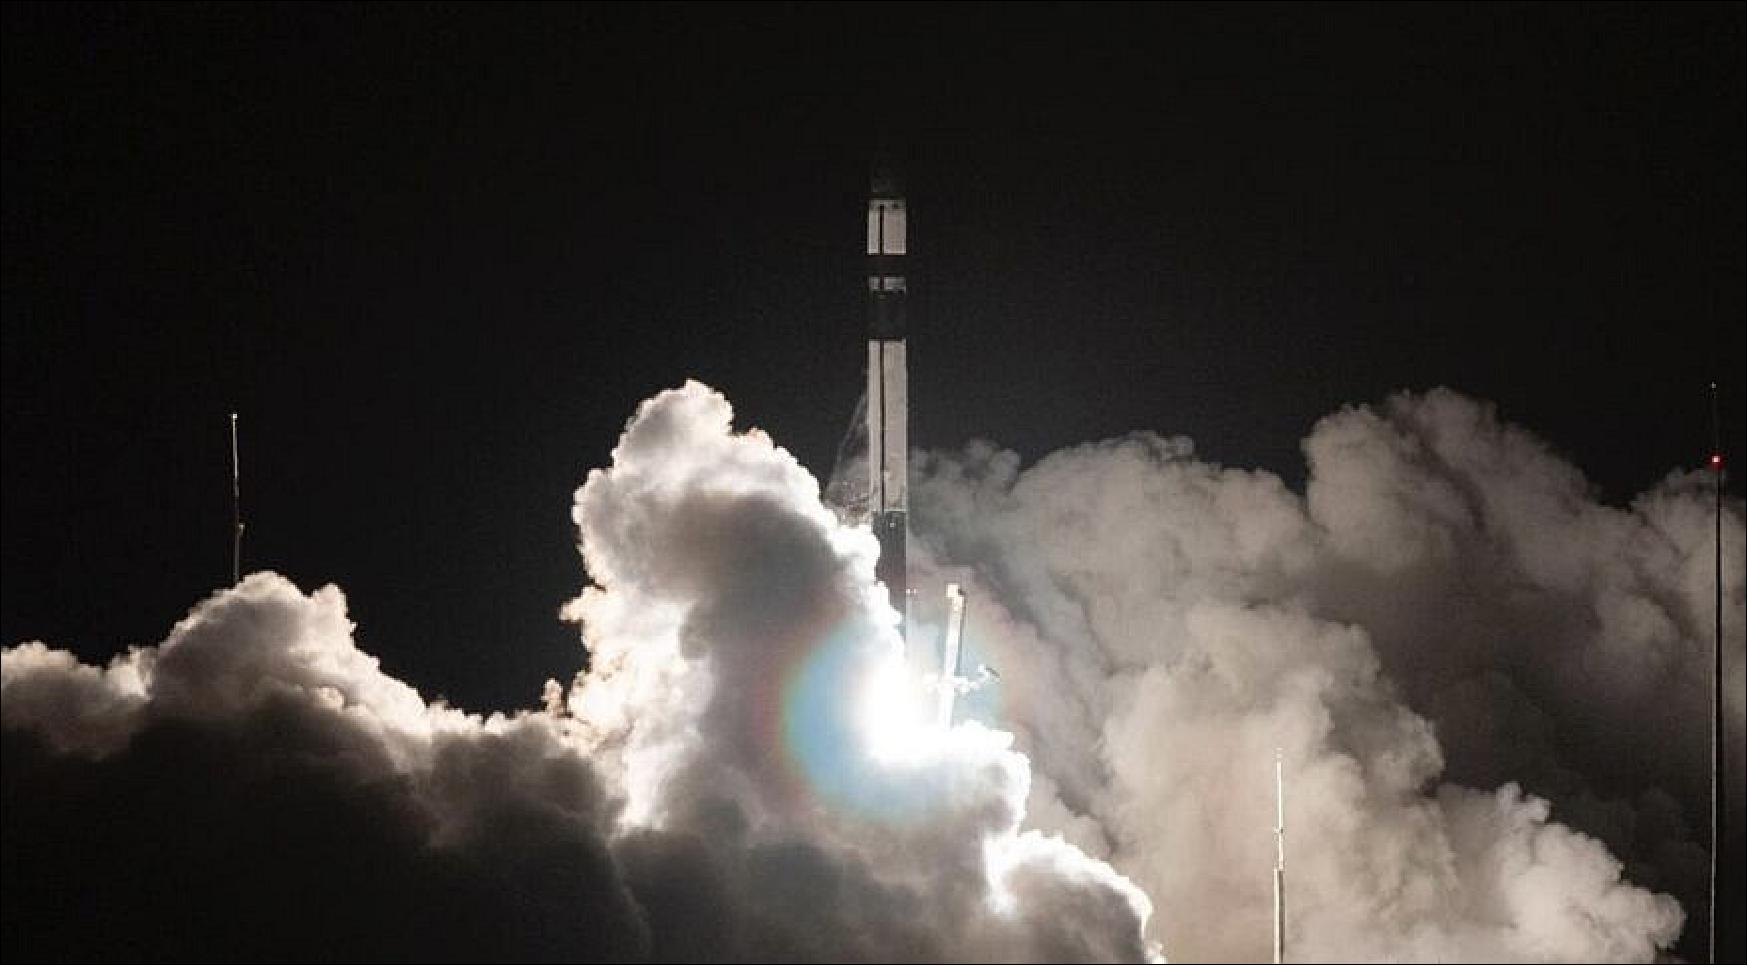 SpaceX Falcon 9 Nasa Launch America Thrust w smoke 3D Printed model kit 16" Tall 